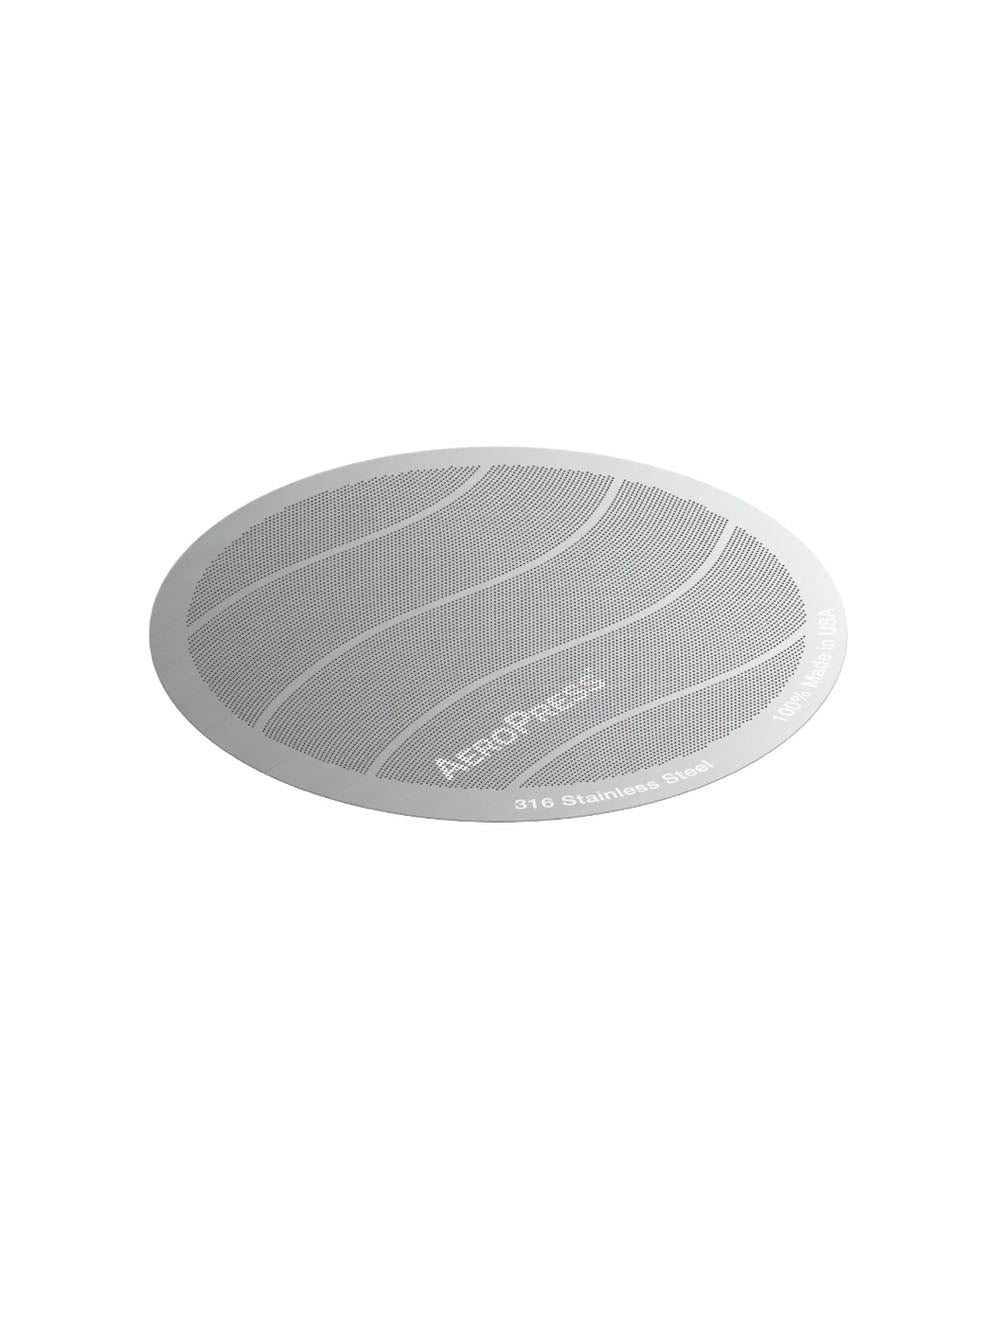 AeroPress - Filtre réutilisable en acier inoxydable - Image 4